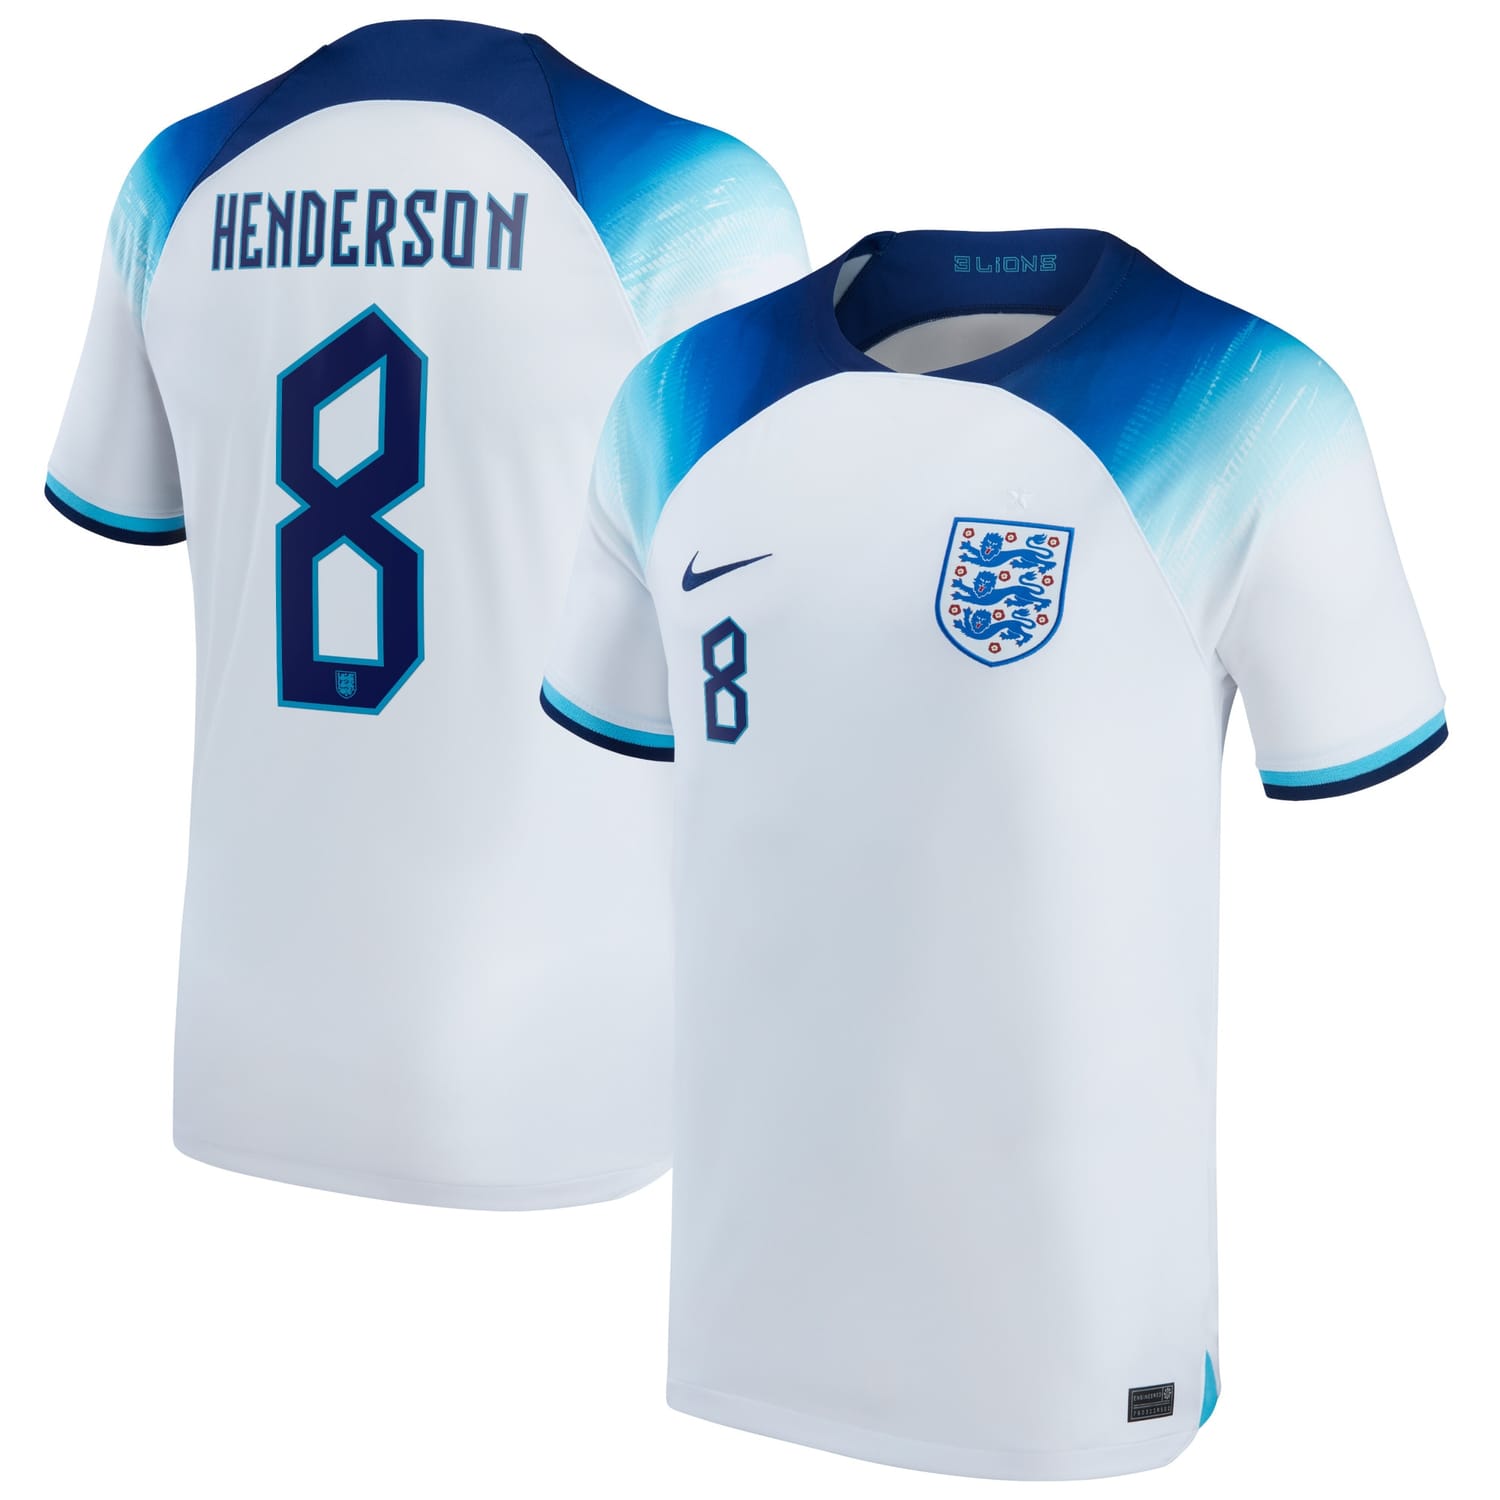 England National Team Home Jersey Shirt 2022 player Jordan Henderson 8 printing for Men